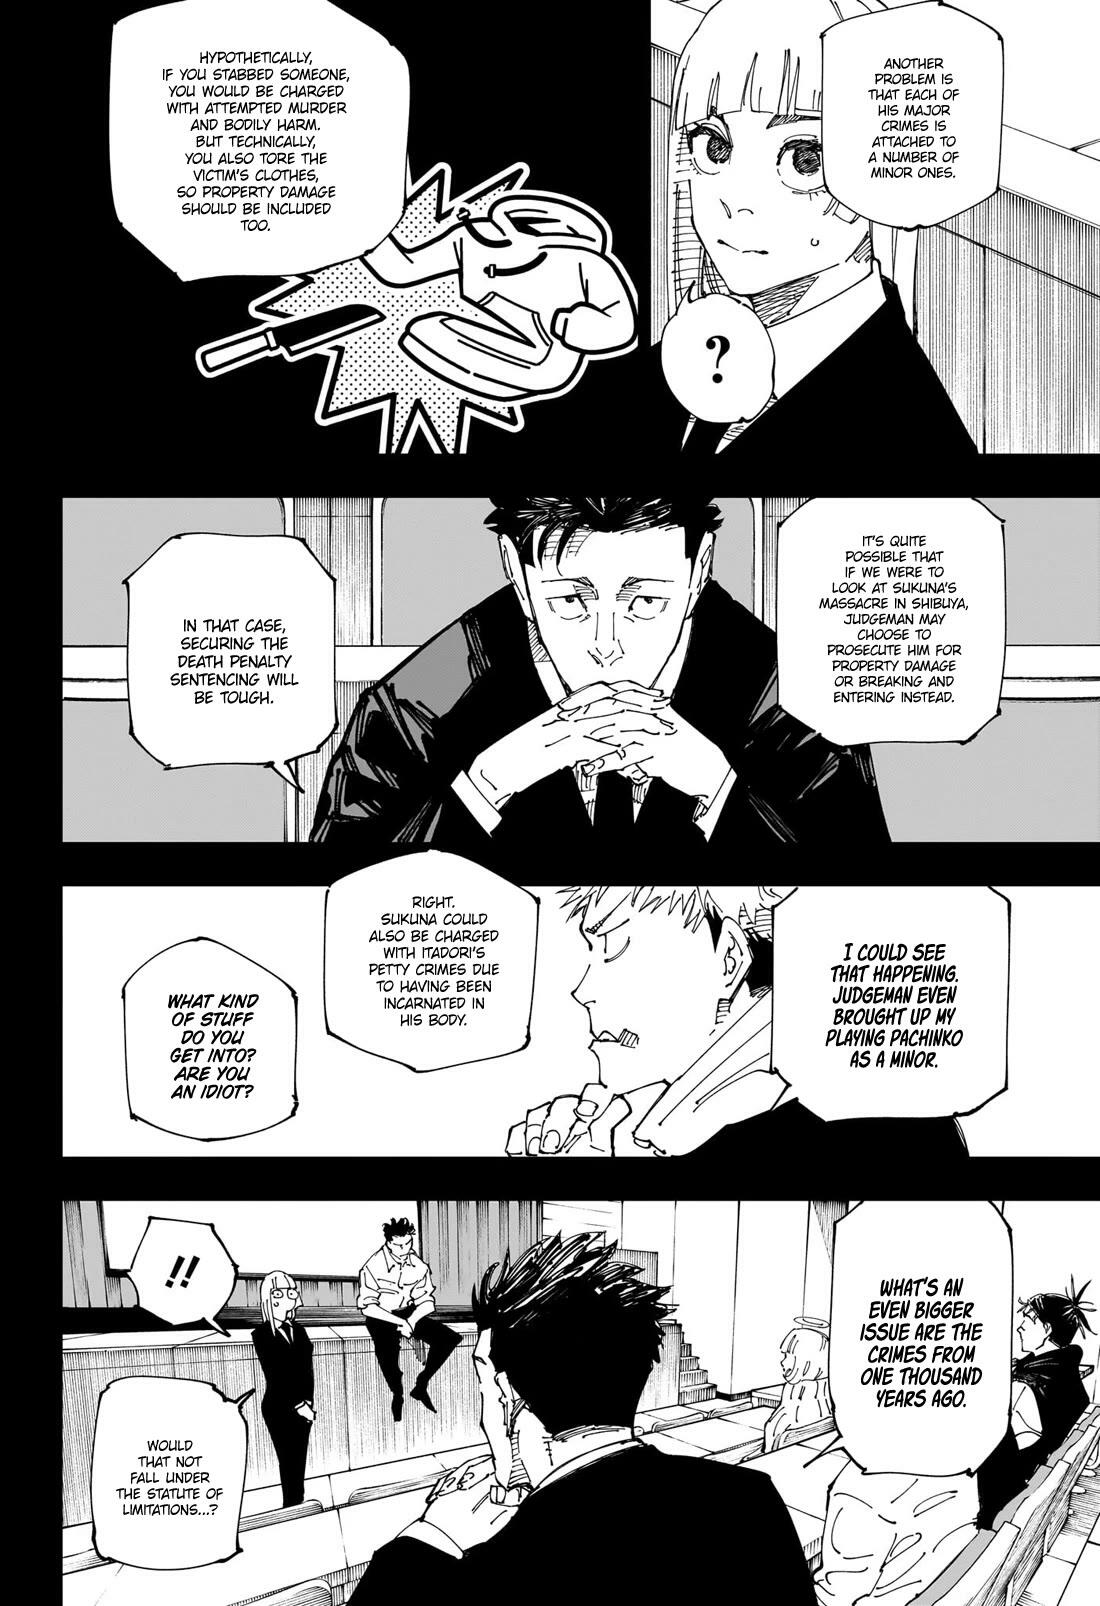 Jujutsu Kaisen Chapter 244: The Decisive Battle In The Uninhabited, Demon-Infested Shinjuku ⑯ page 9 - Mangakakalot